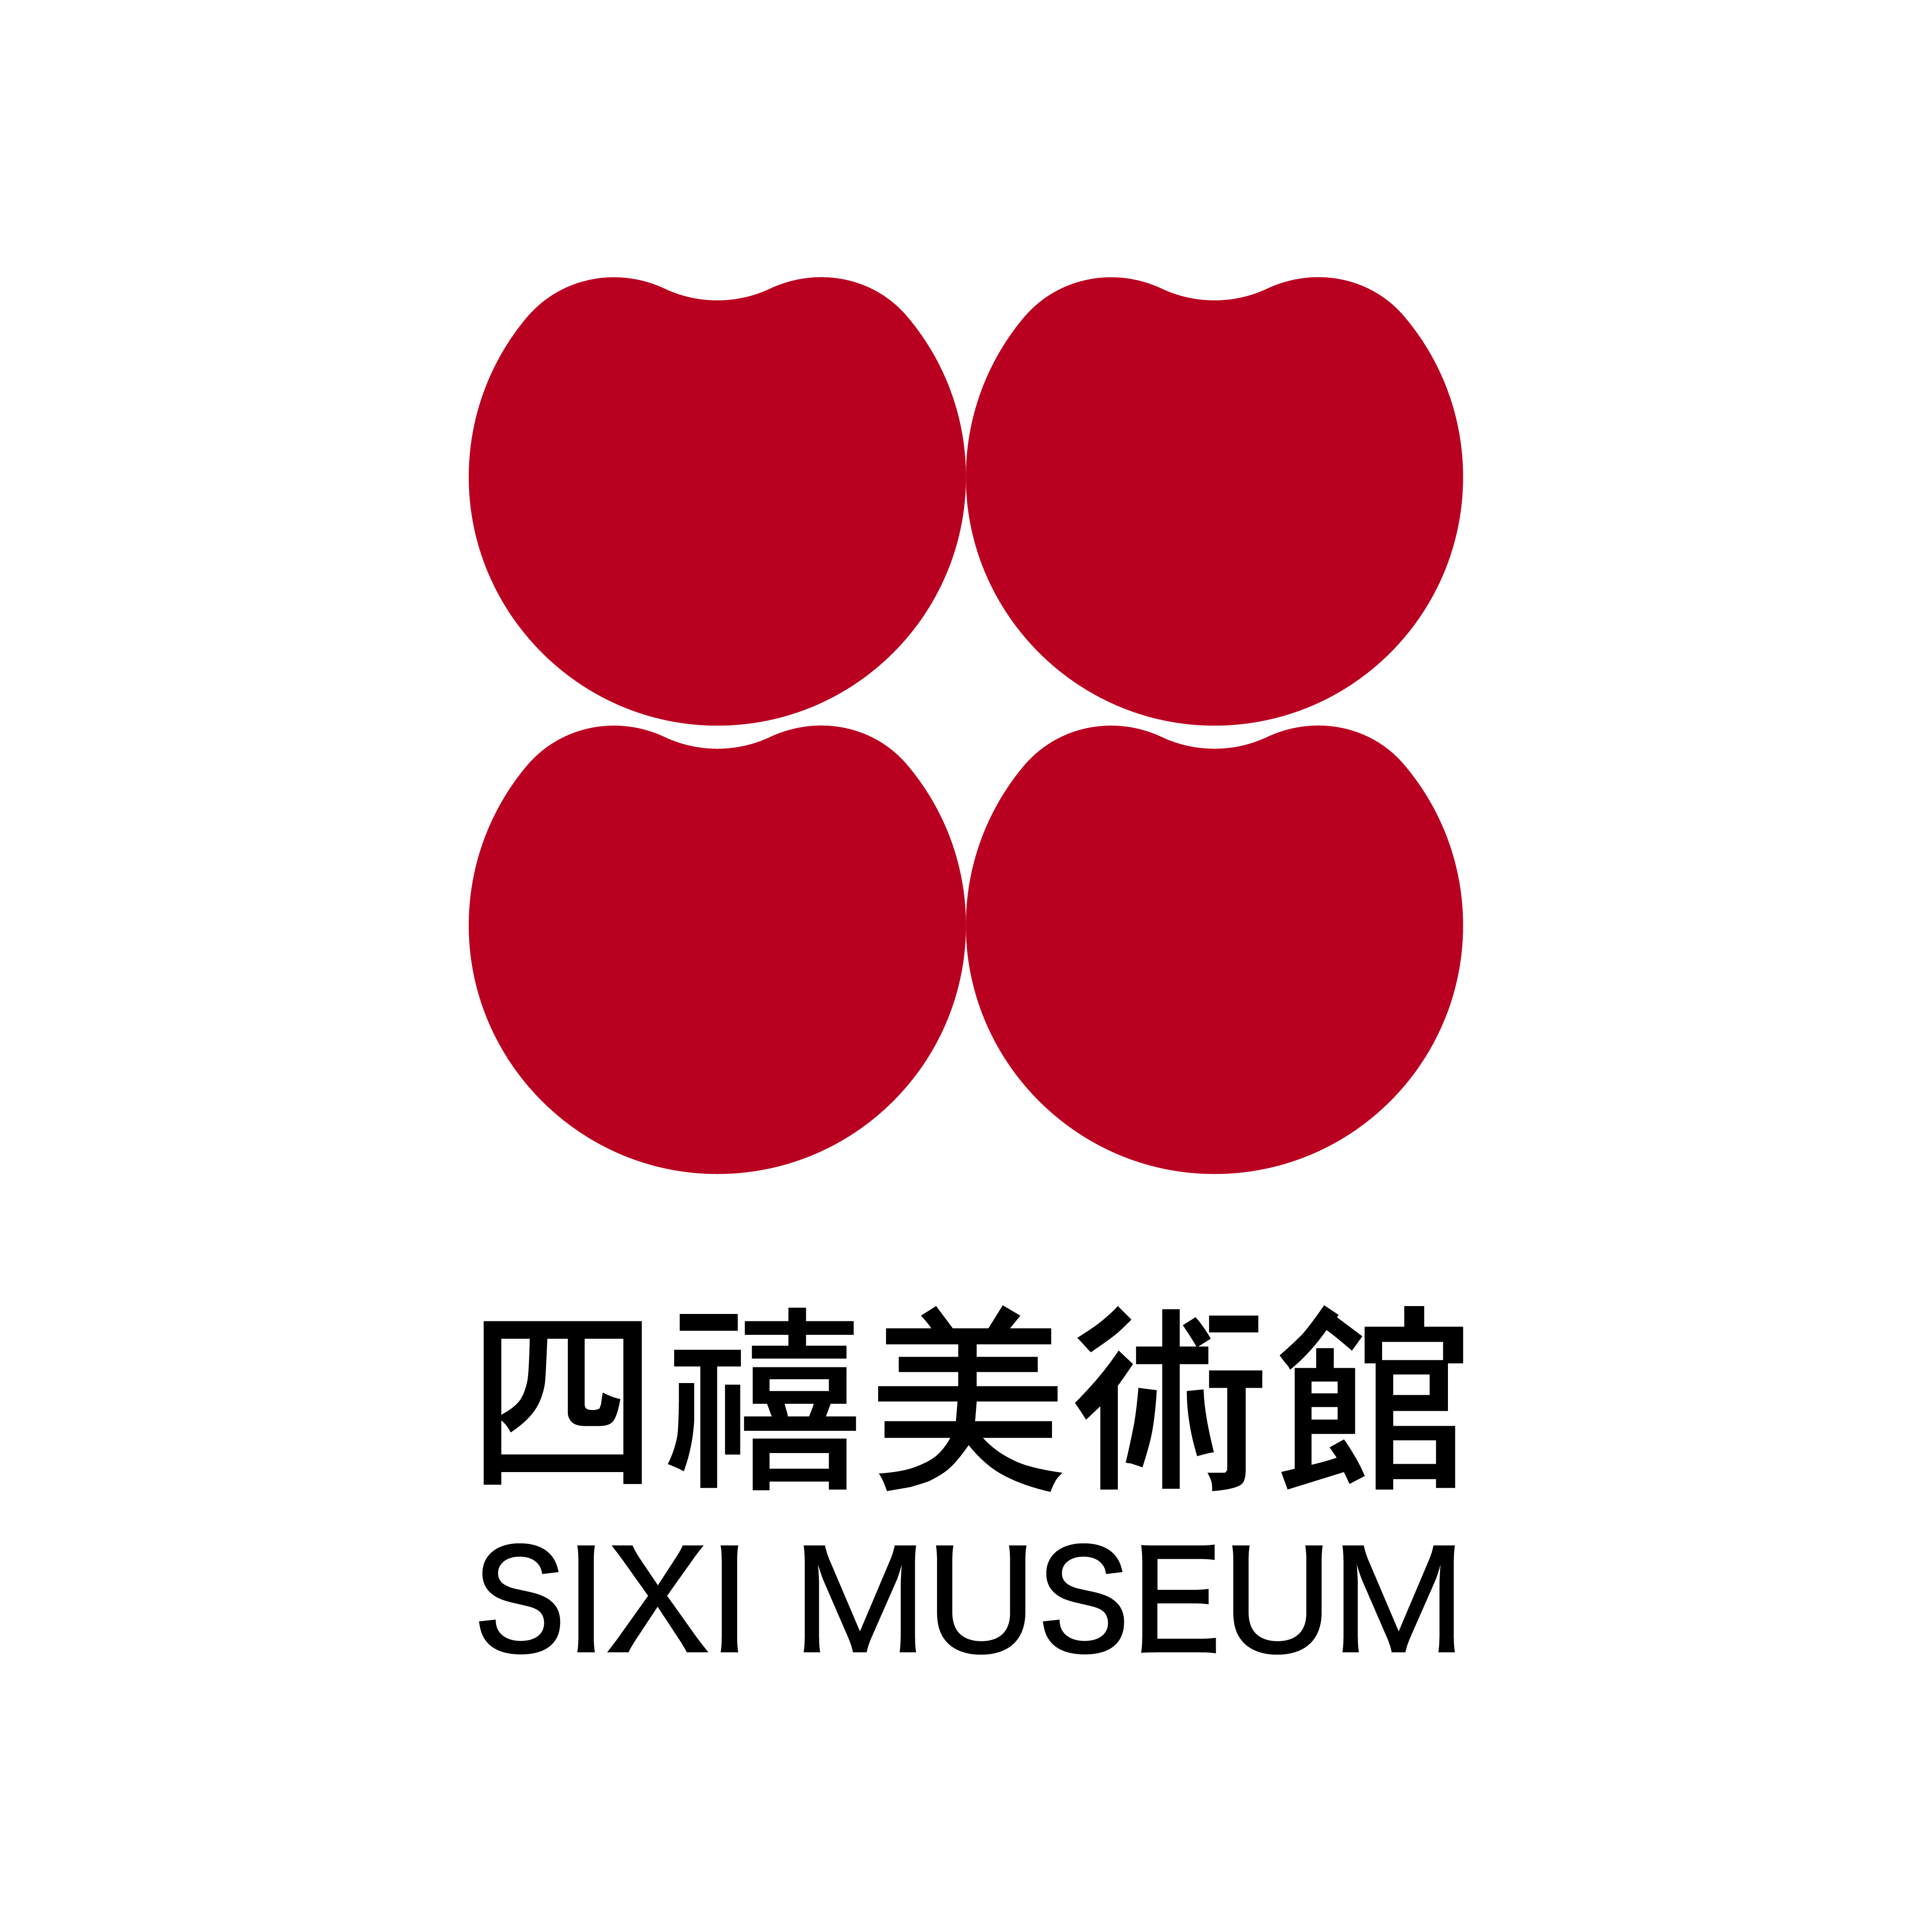 Sixi Museum company logo